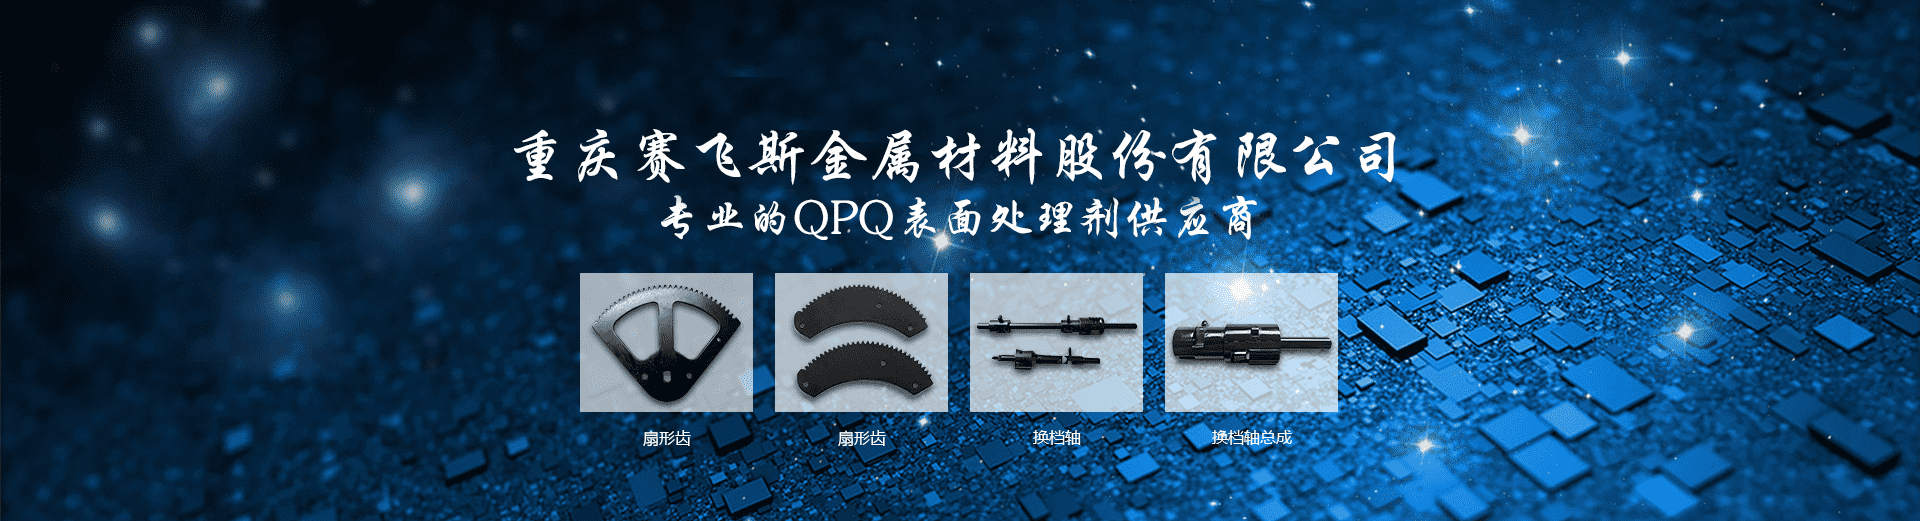 QPQ处理技术